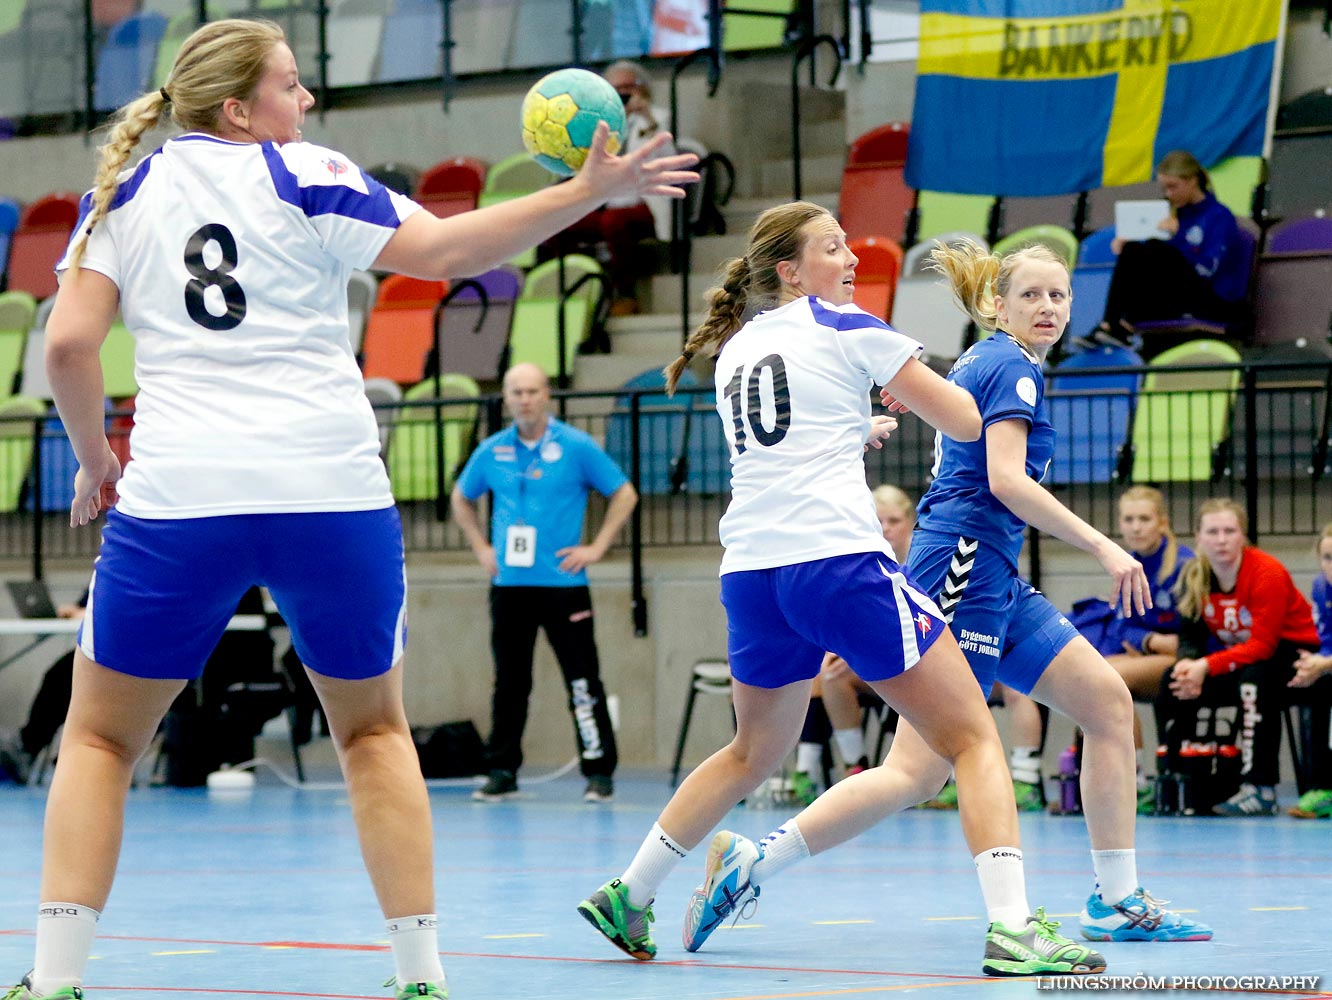 IFK Bankeryd-Alingsås HK 23-25,dam,Idrottshuset,Jönköping,Sverige,Handboll,,2015,108486